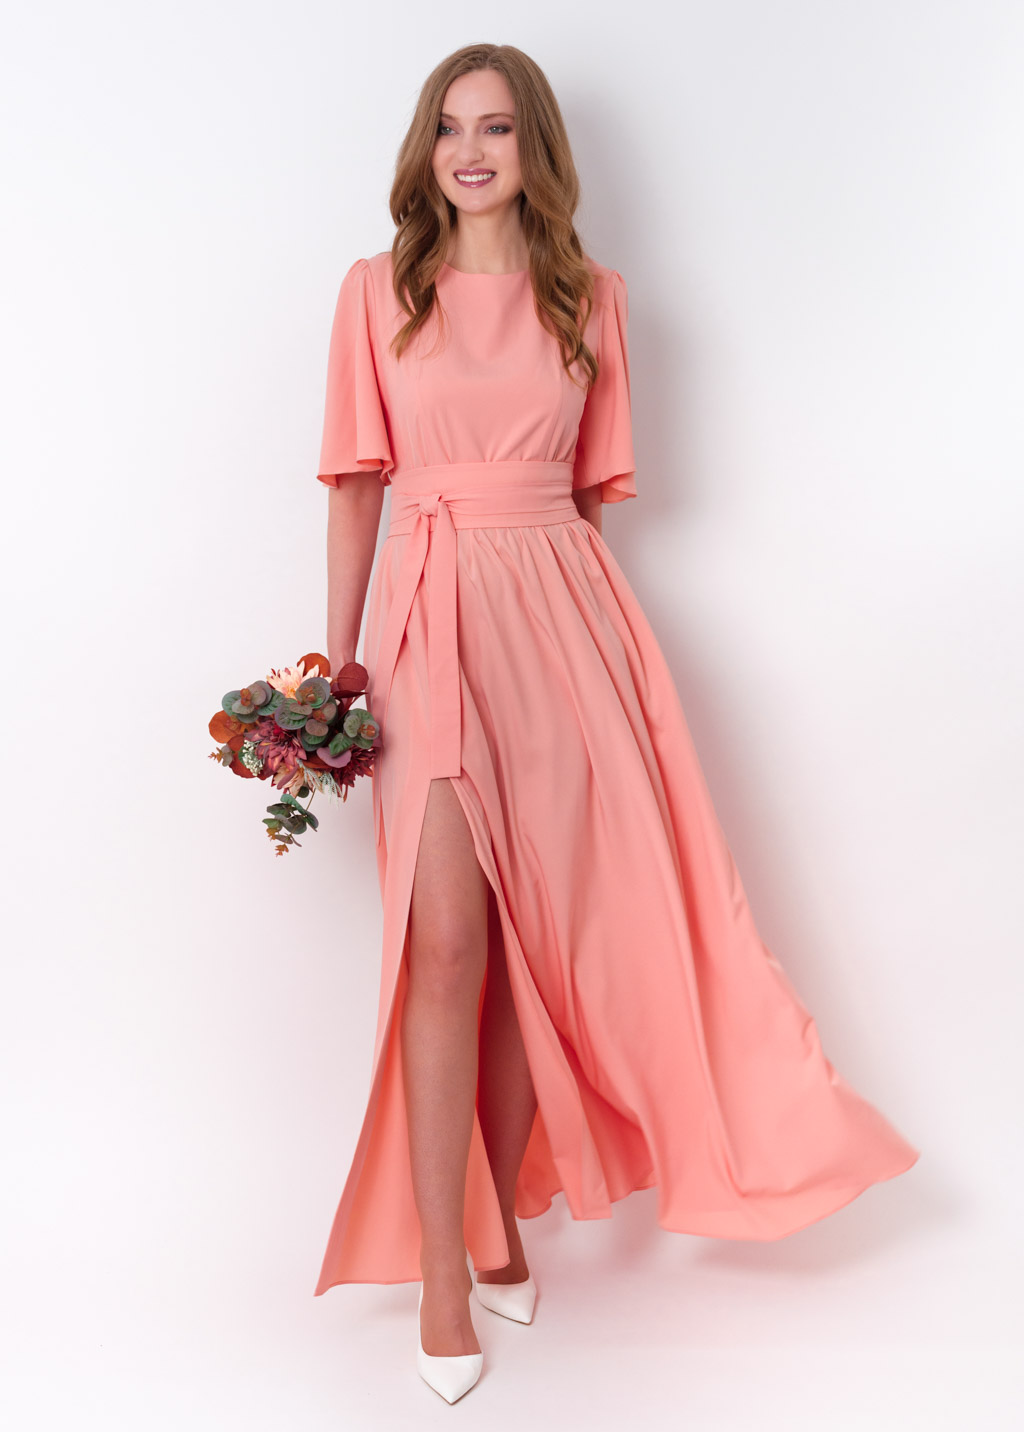 Blush pink long slit dress with belt